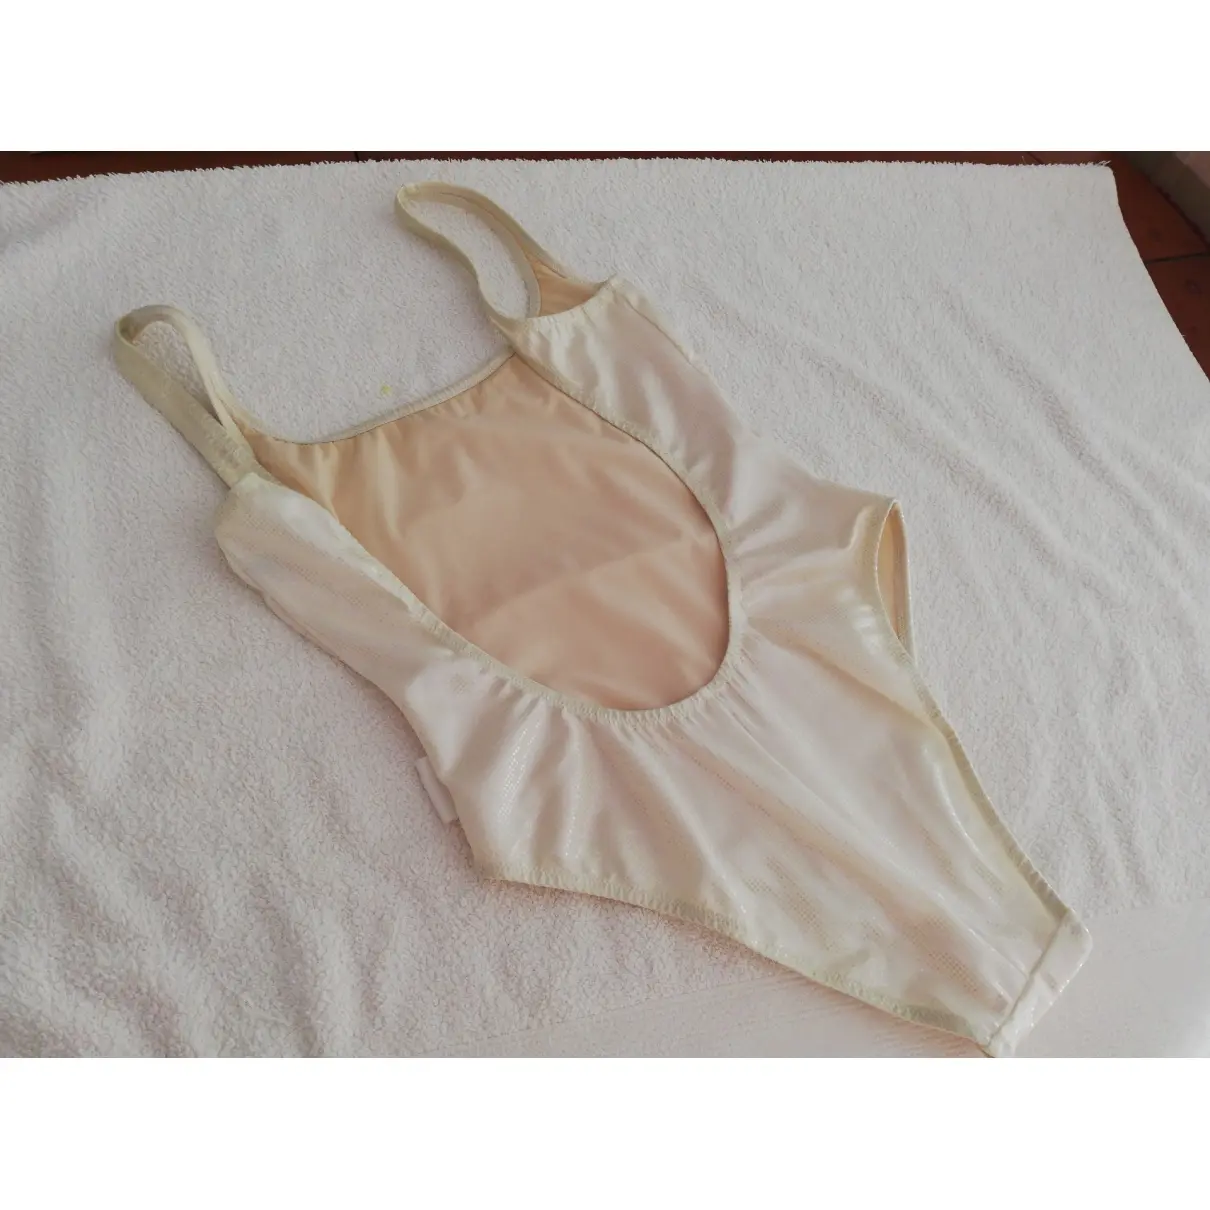 Emporio Armani One-piece swimsuit for sale